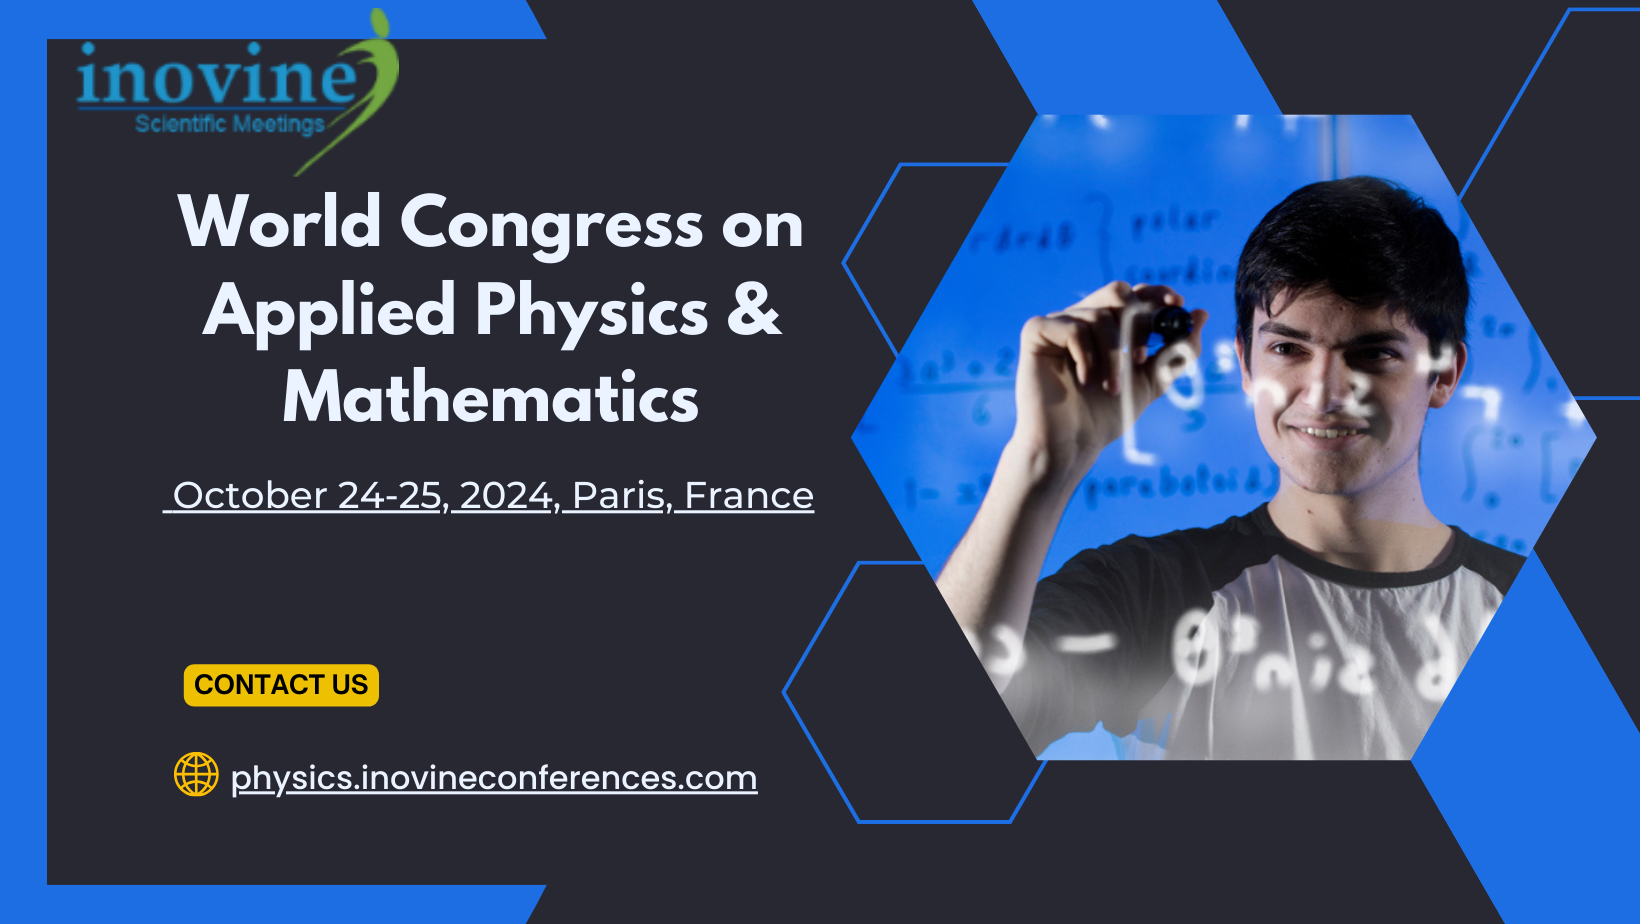 World Congress on Applied Physics & Mathematics, Paris, France